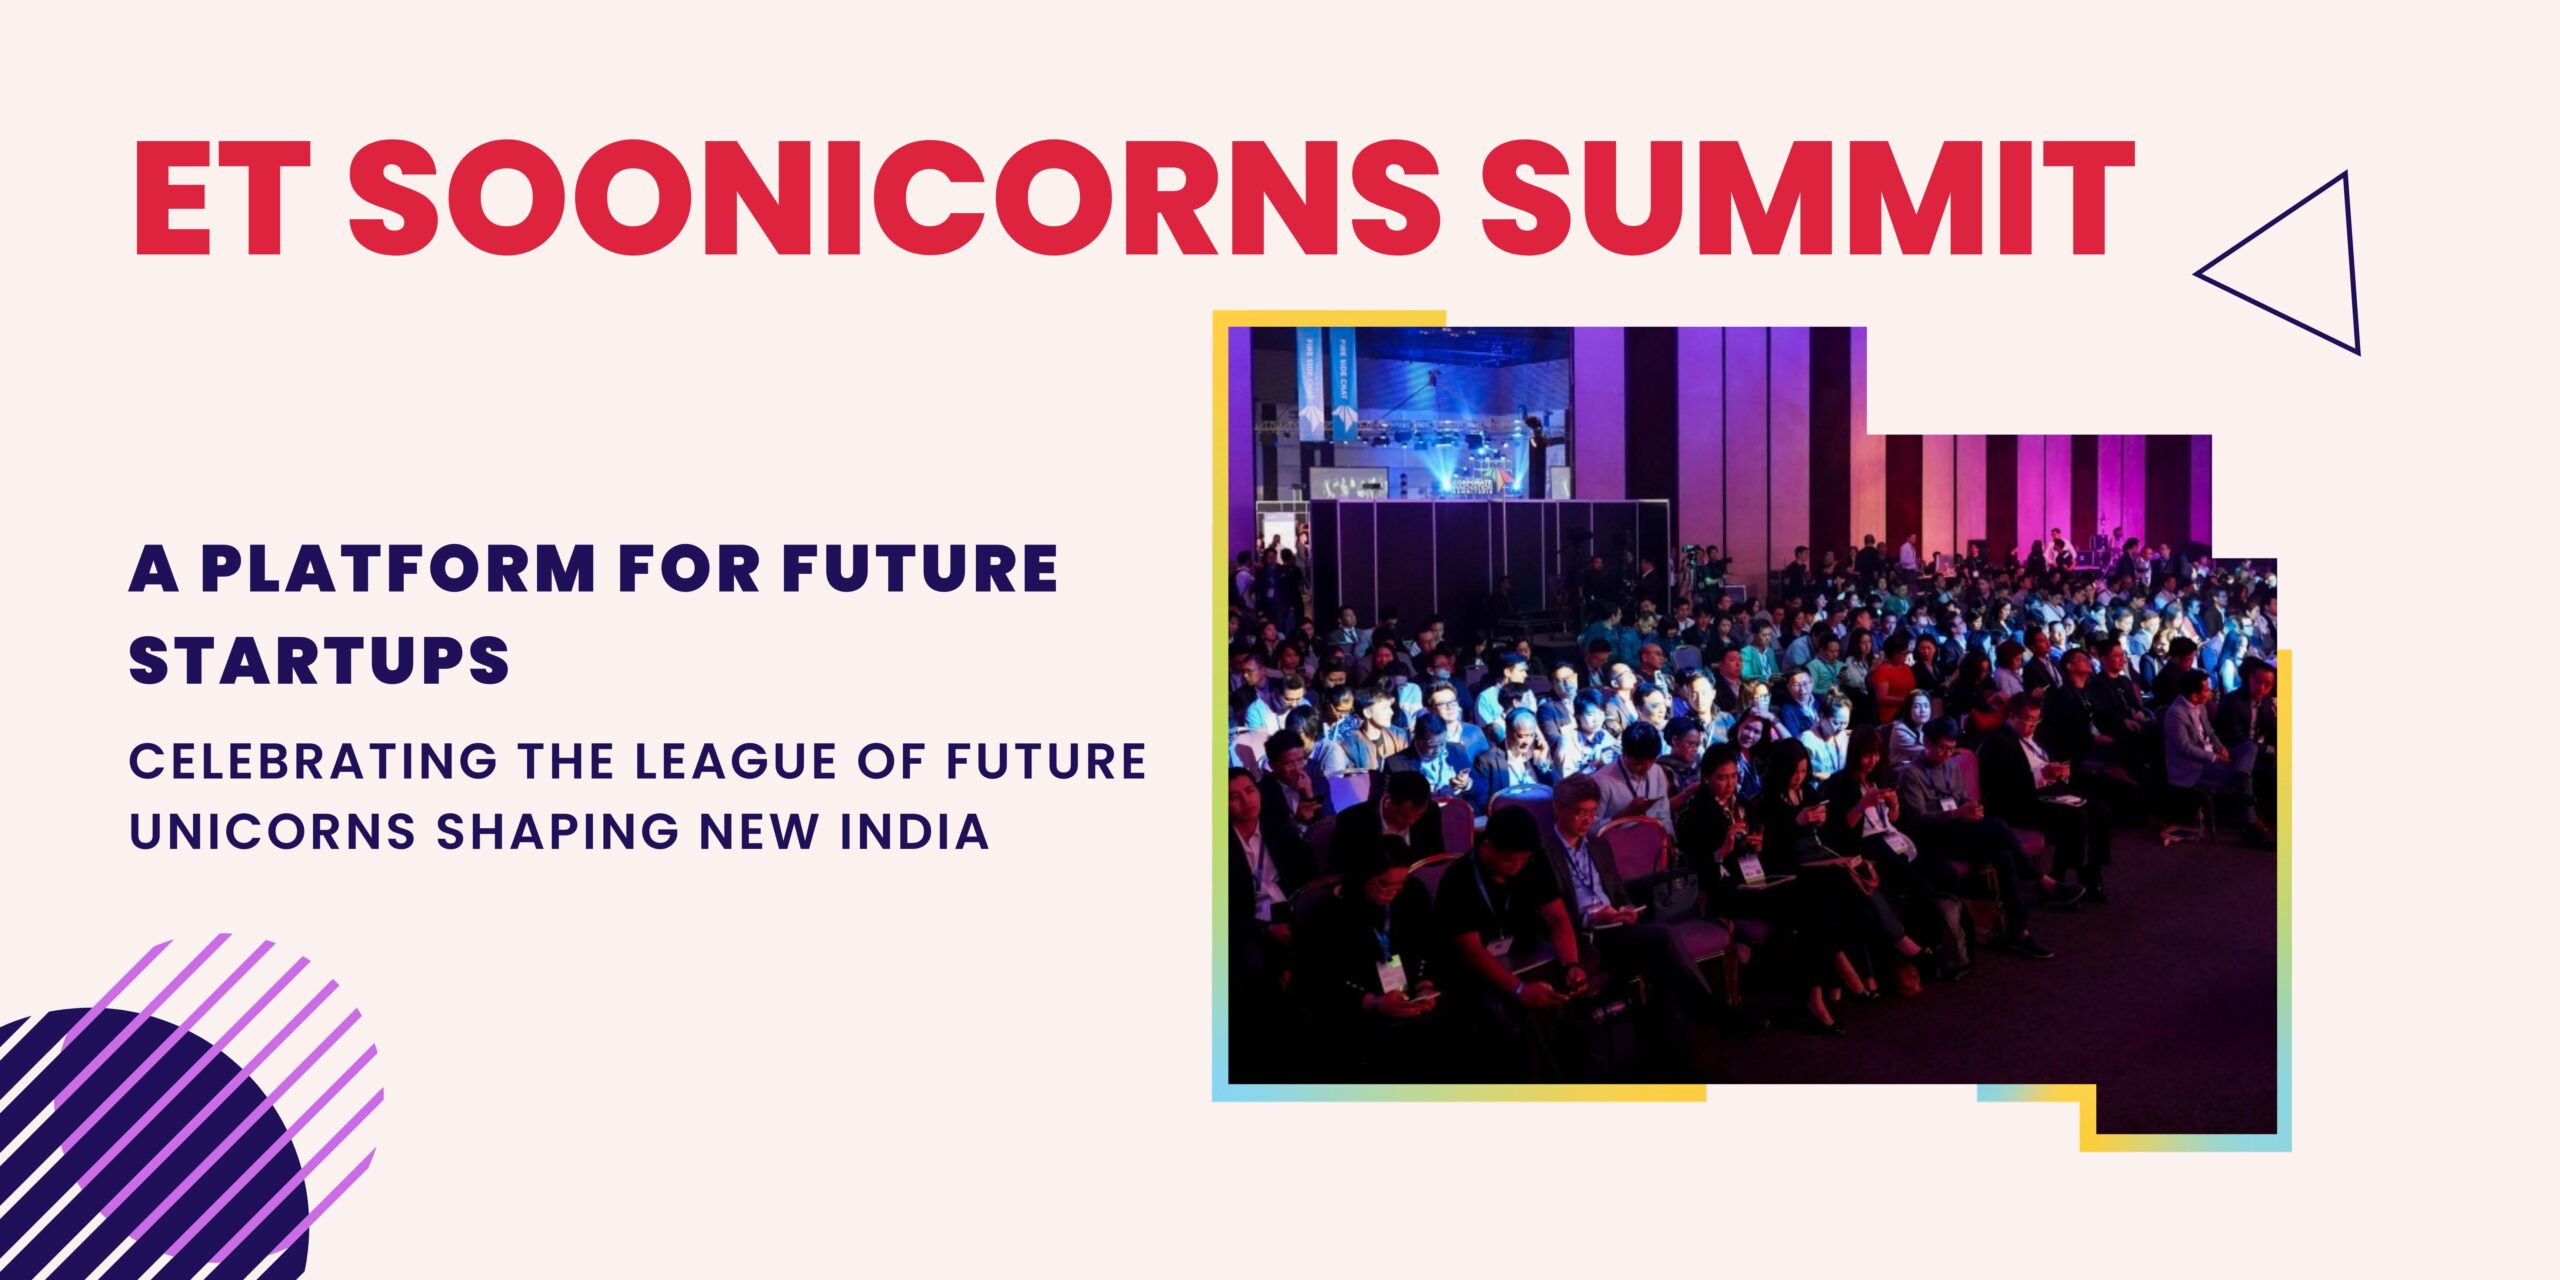 ET Soonicorns Summit: A platform for future startups